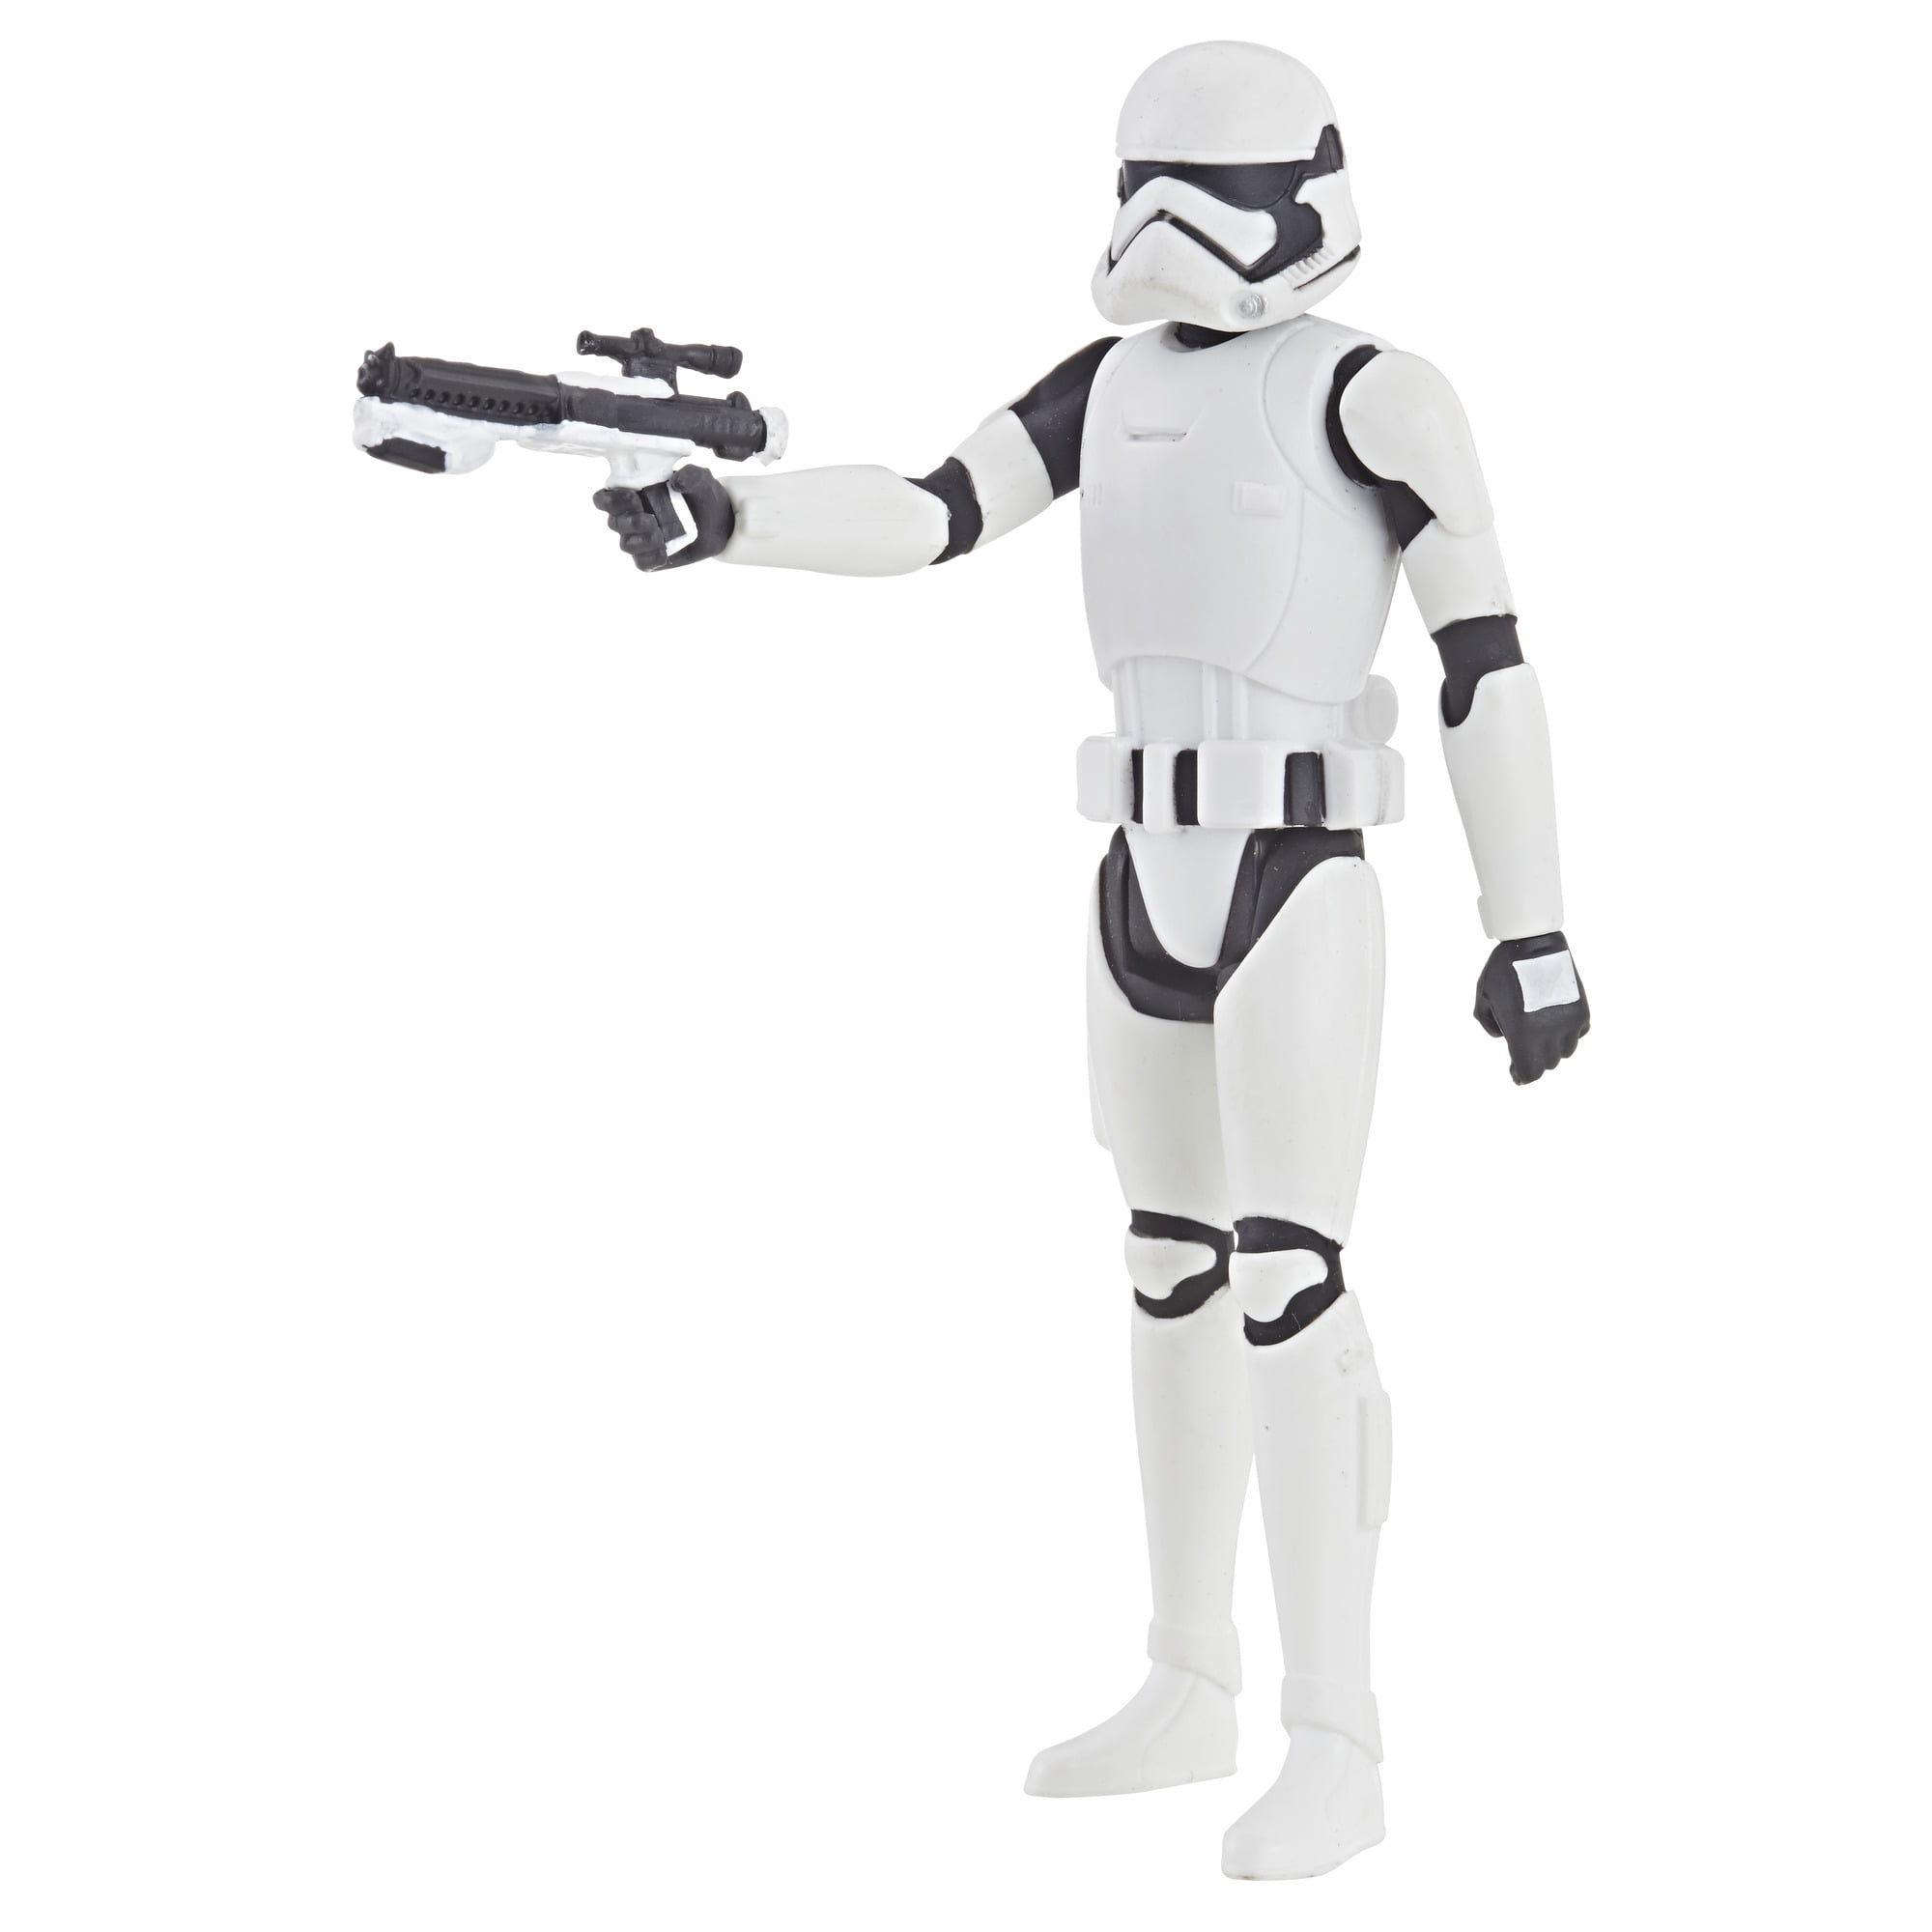 3.75 Star Wars Clone Wars Stormtrooper Pilots Darth Vader Yoda Figures Toys